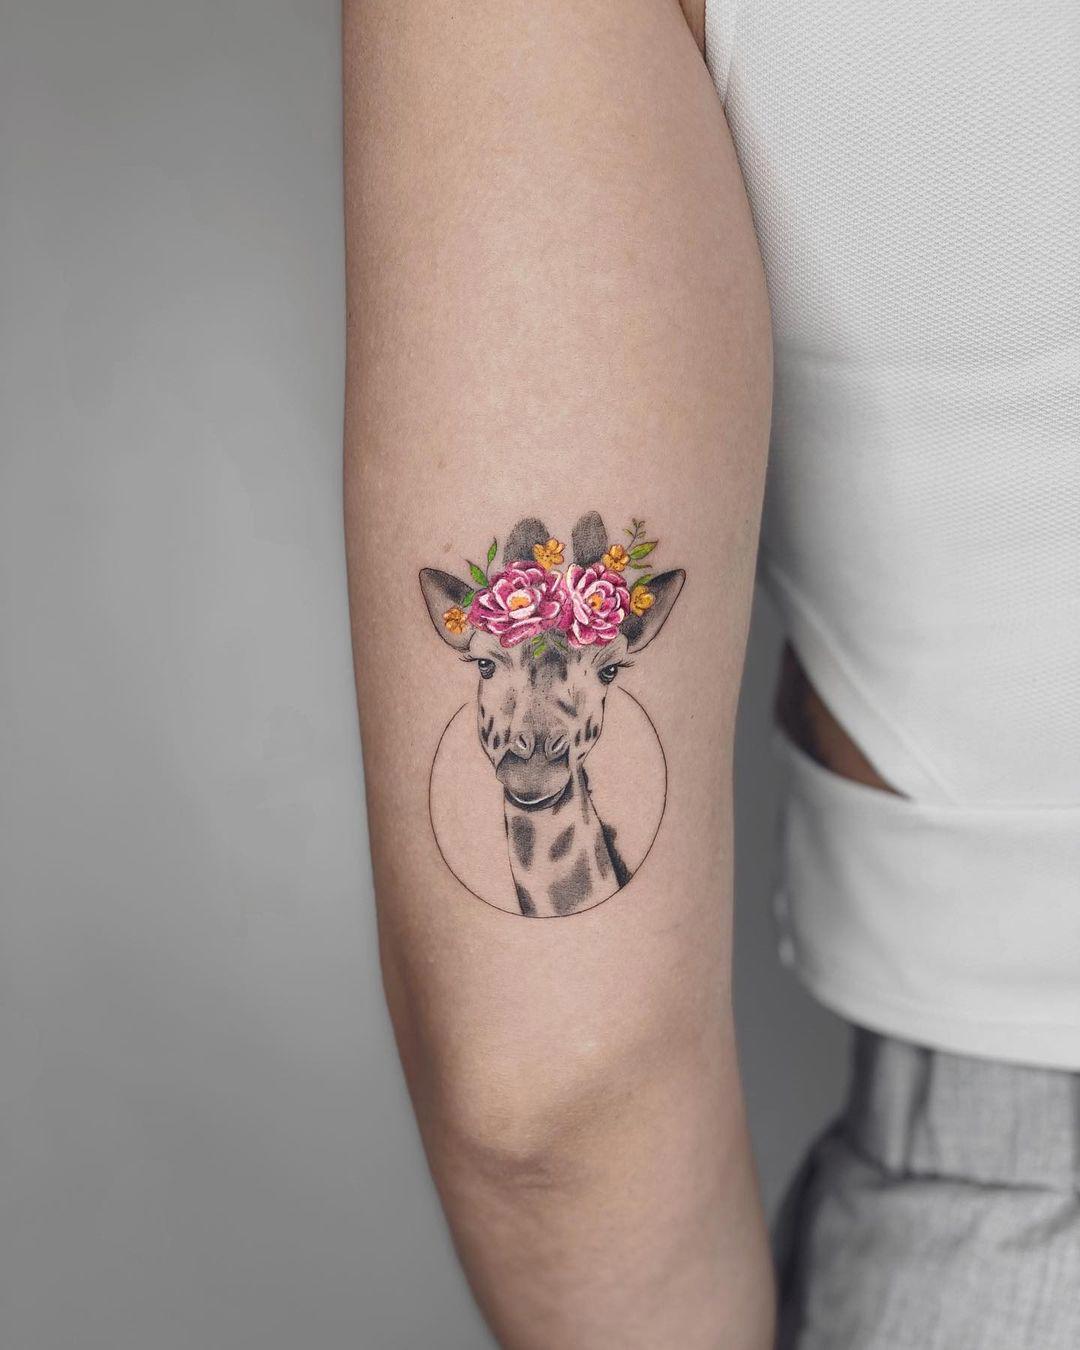 Tatuajes de flores y animales